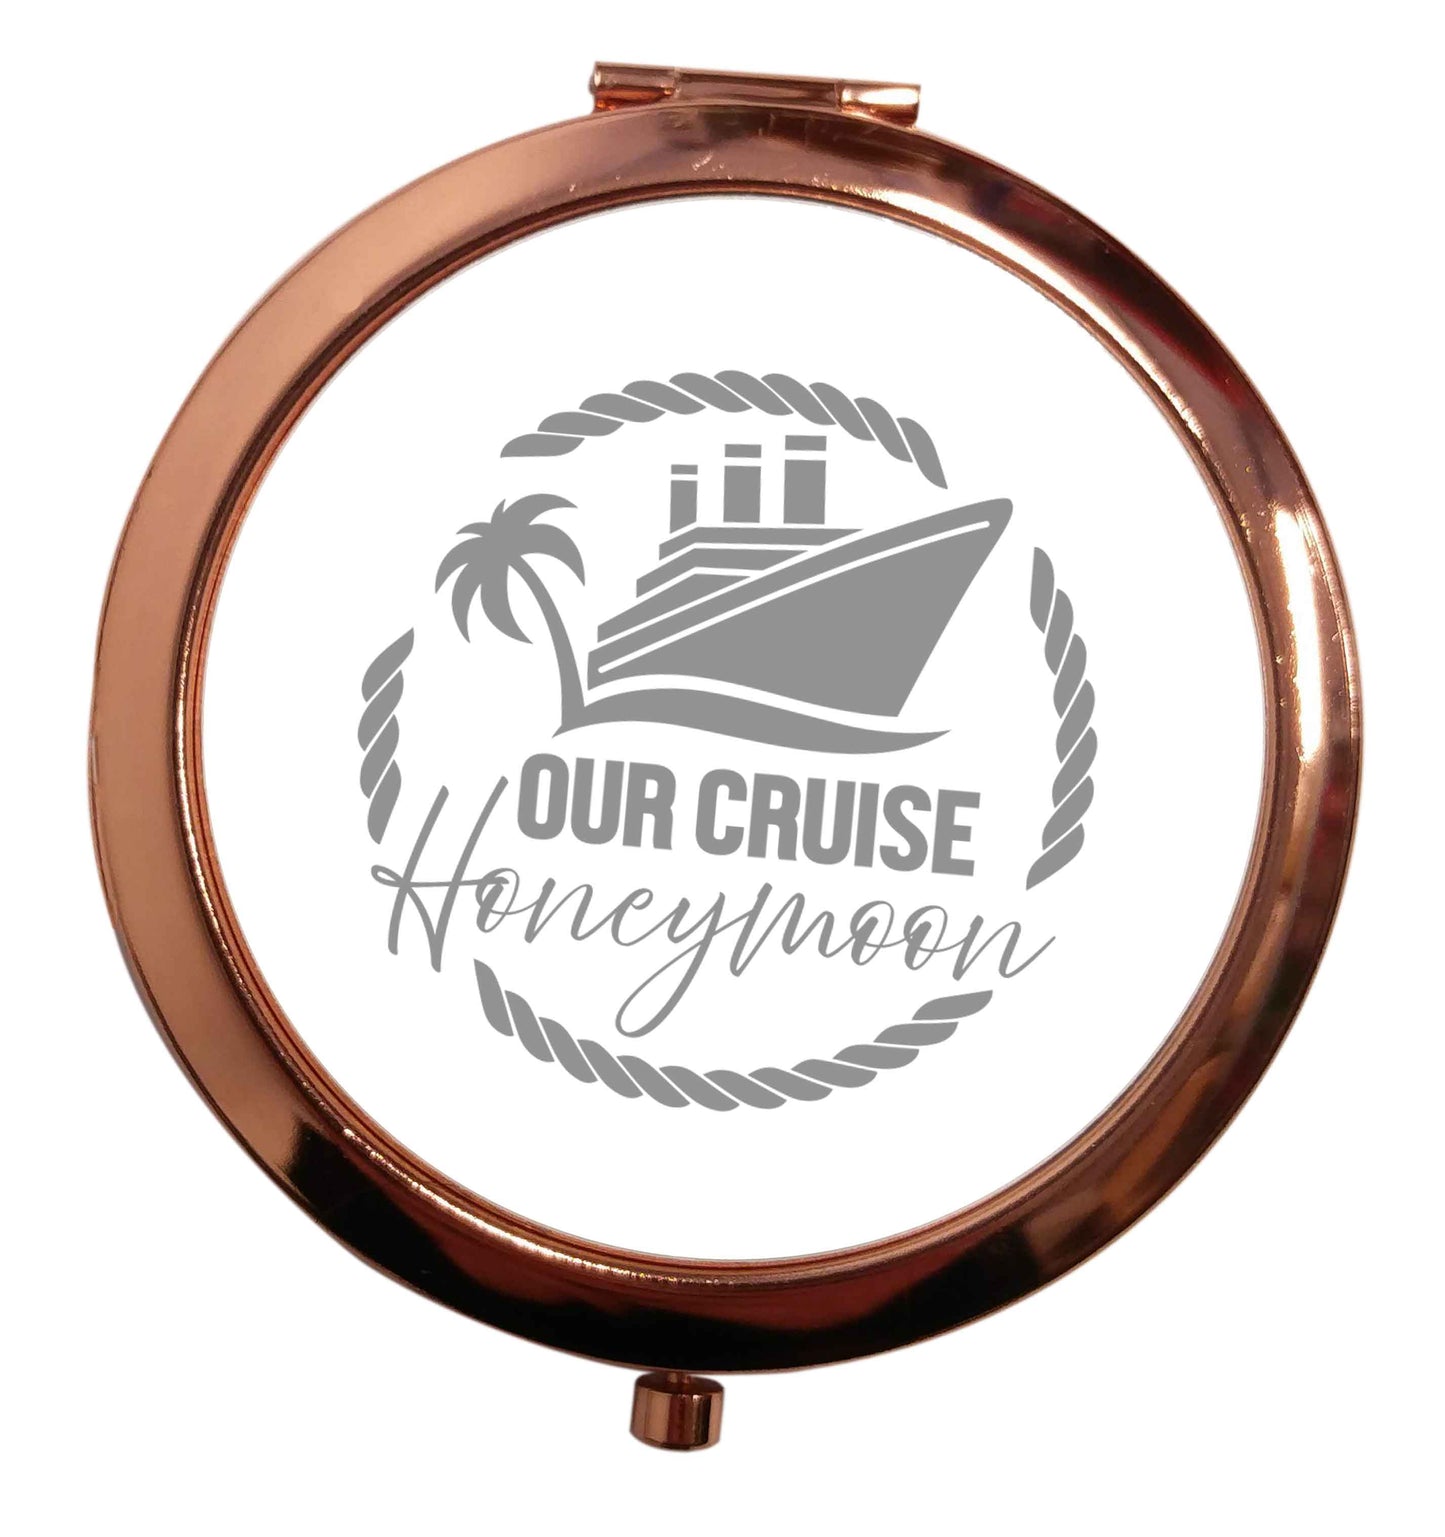 Our cruise honeymoon rose gold circle pocket mirror